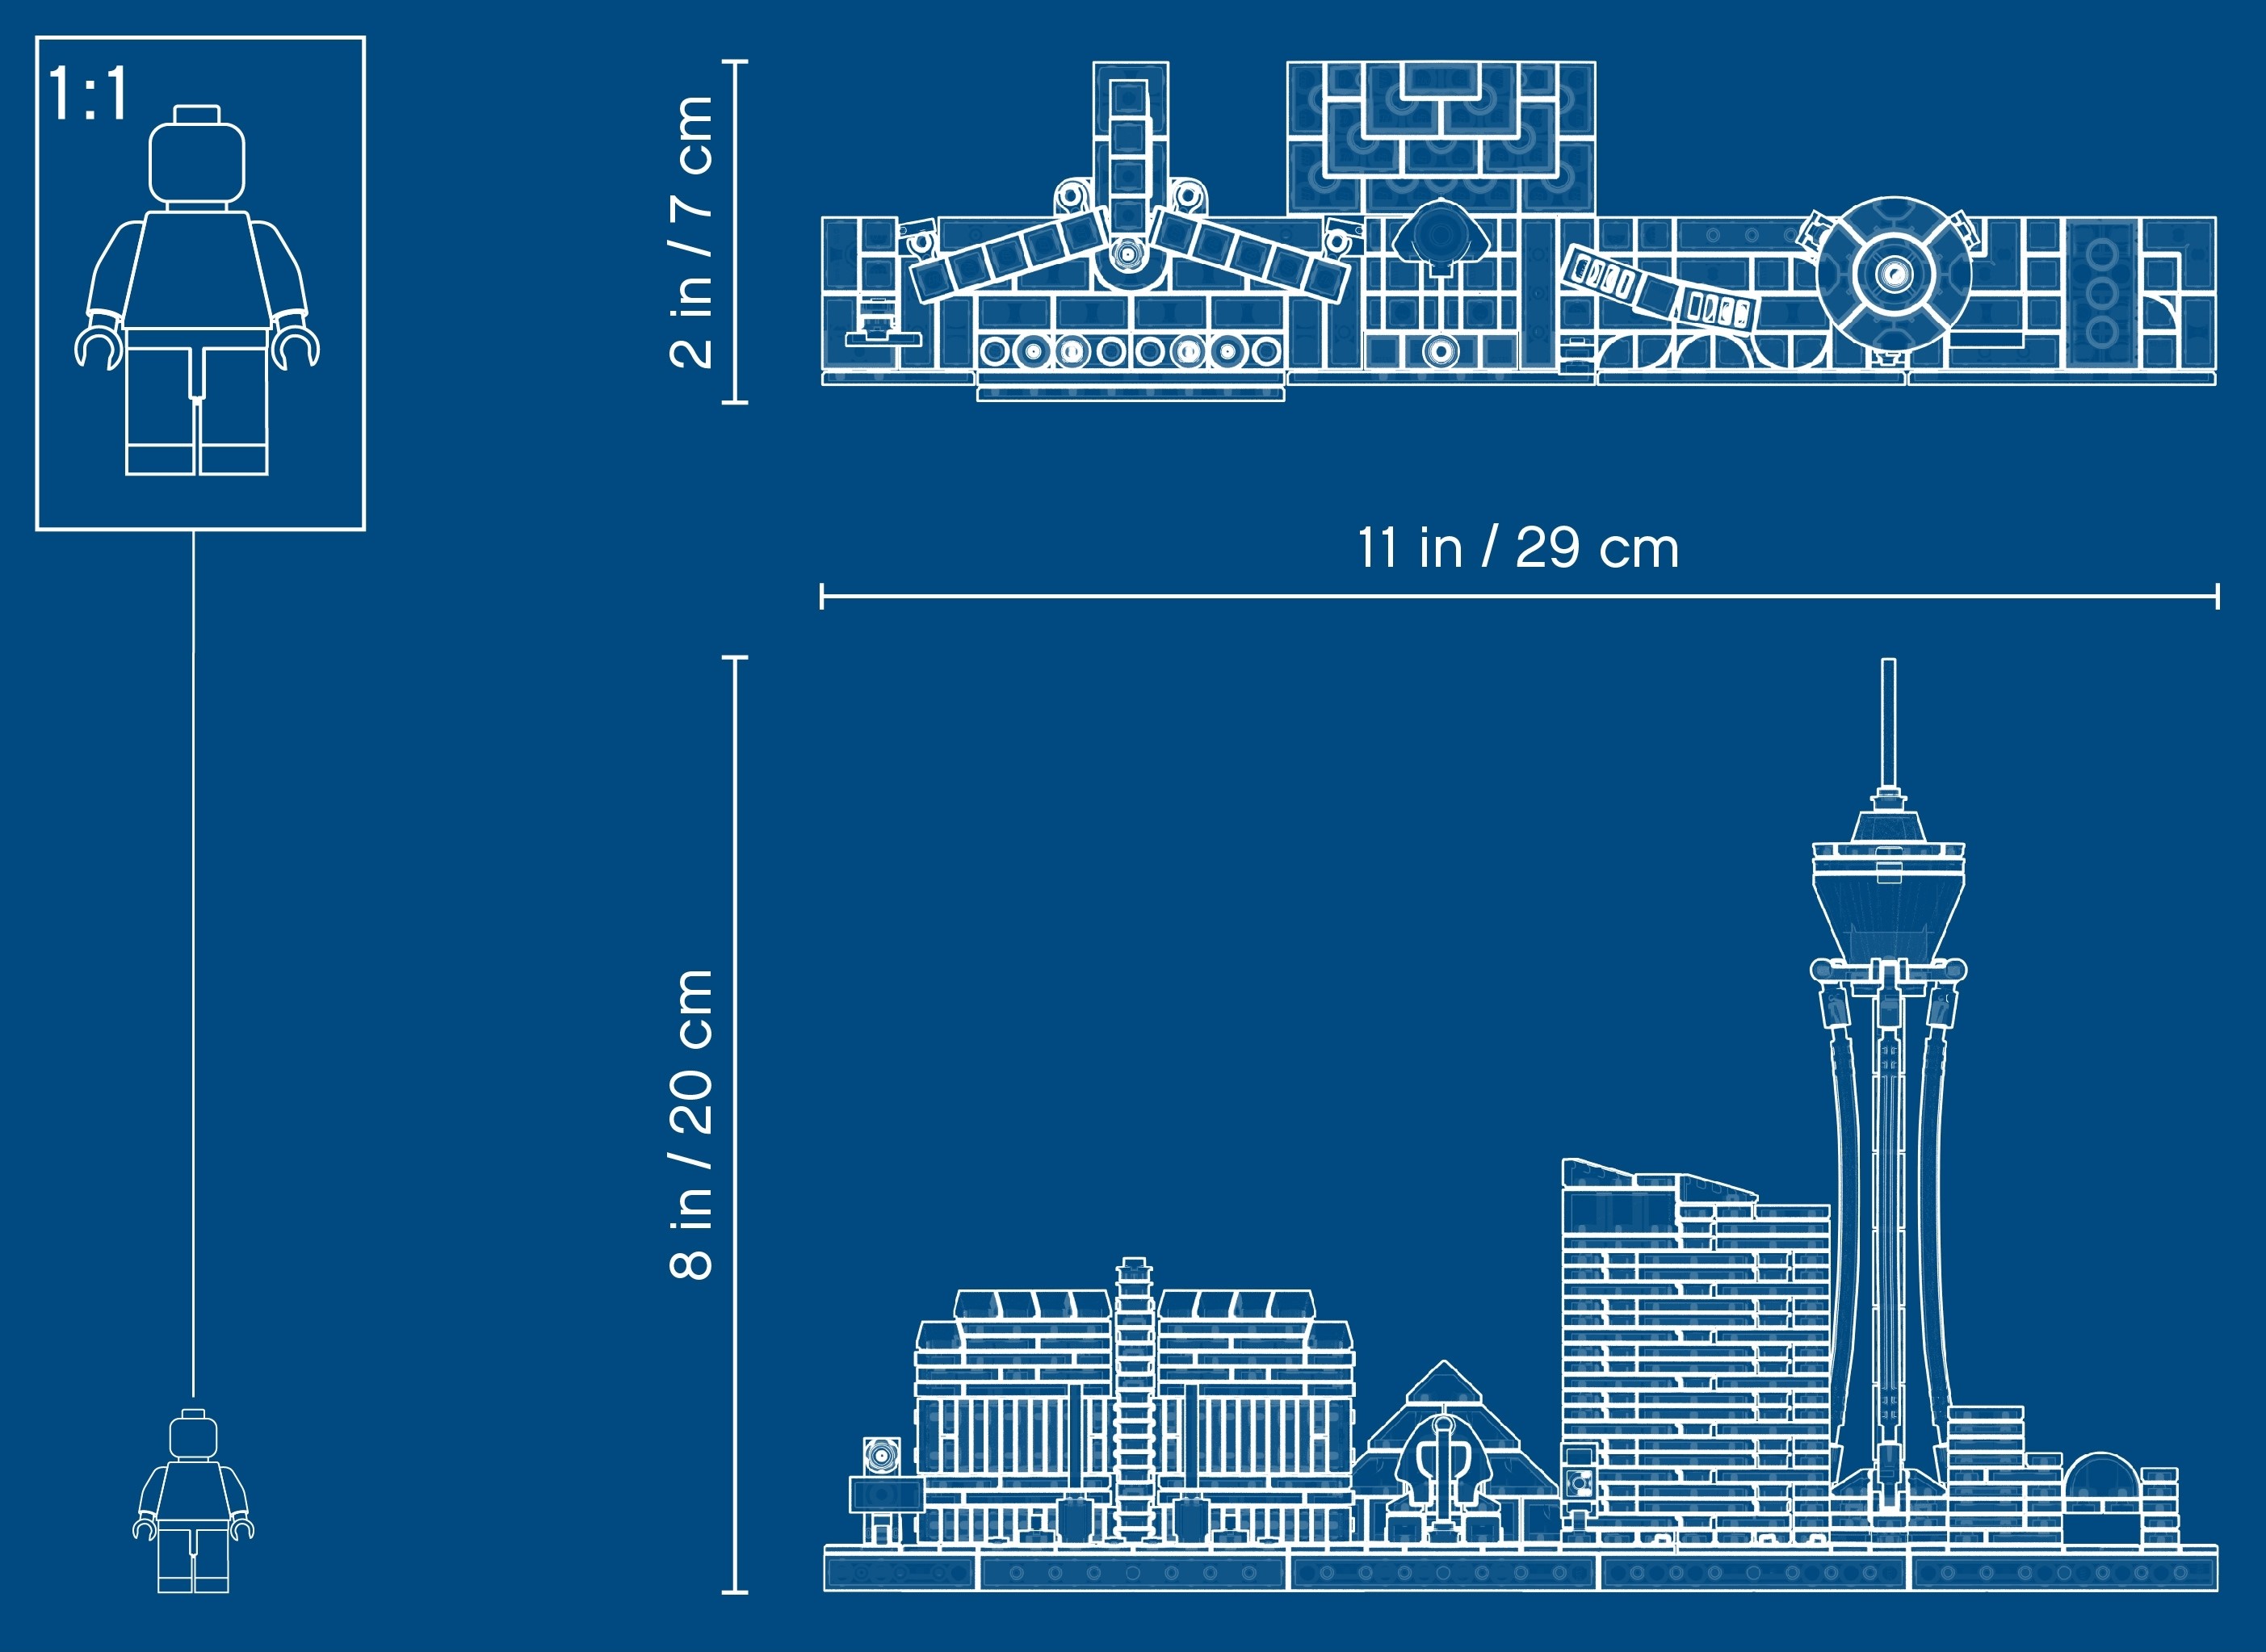 Las Vegas 21047 | Architecture | Buy online at the Official LEGO® Shop US